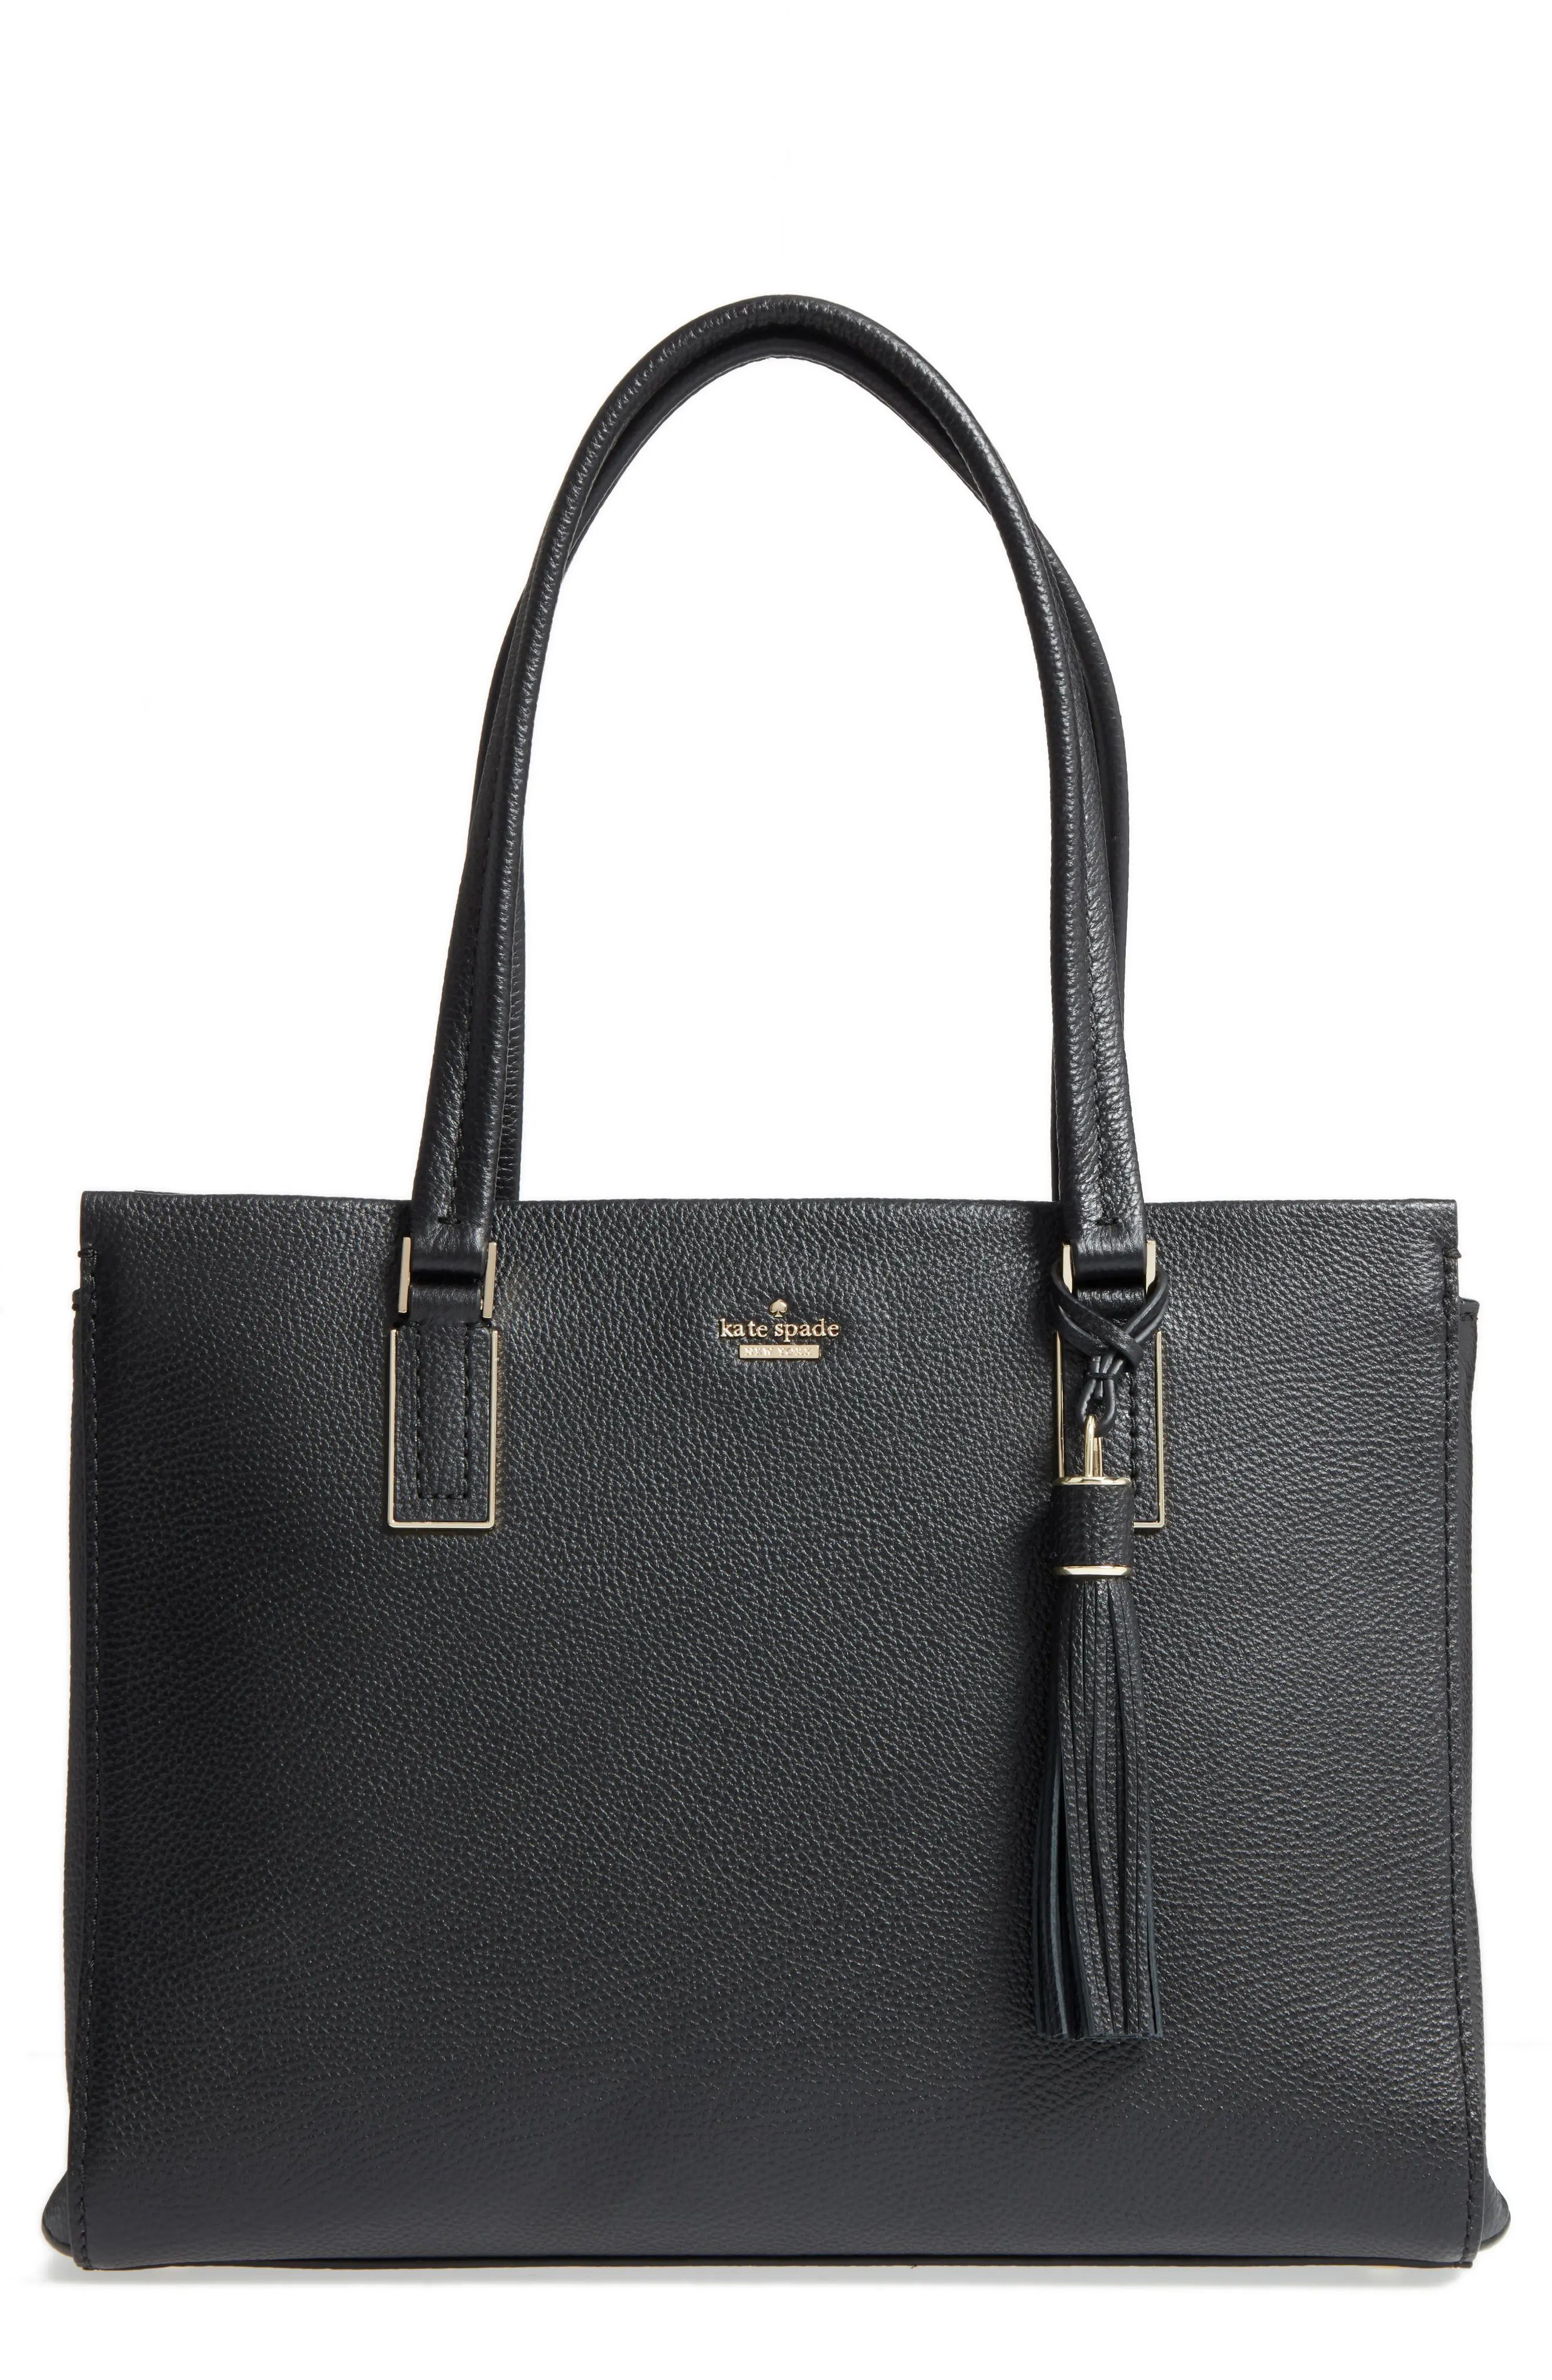 kingston drive - bartlett leather satchel | Nordstrom